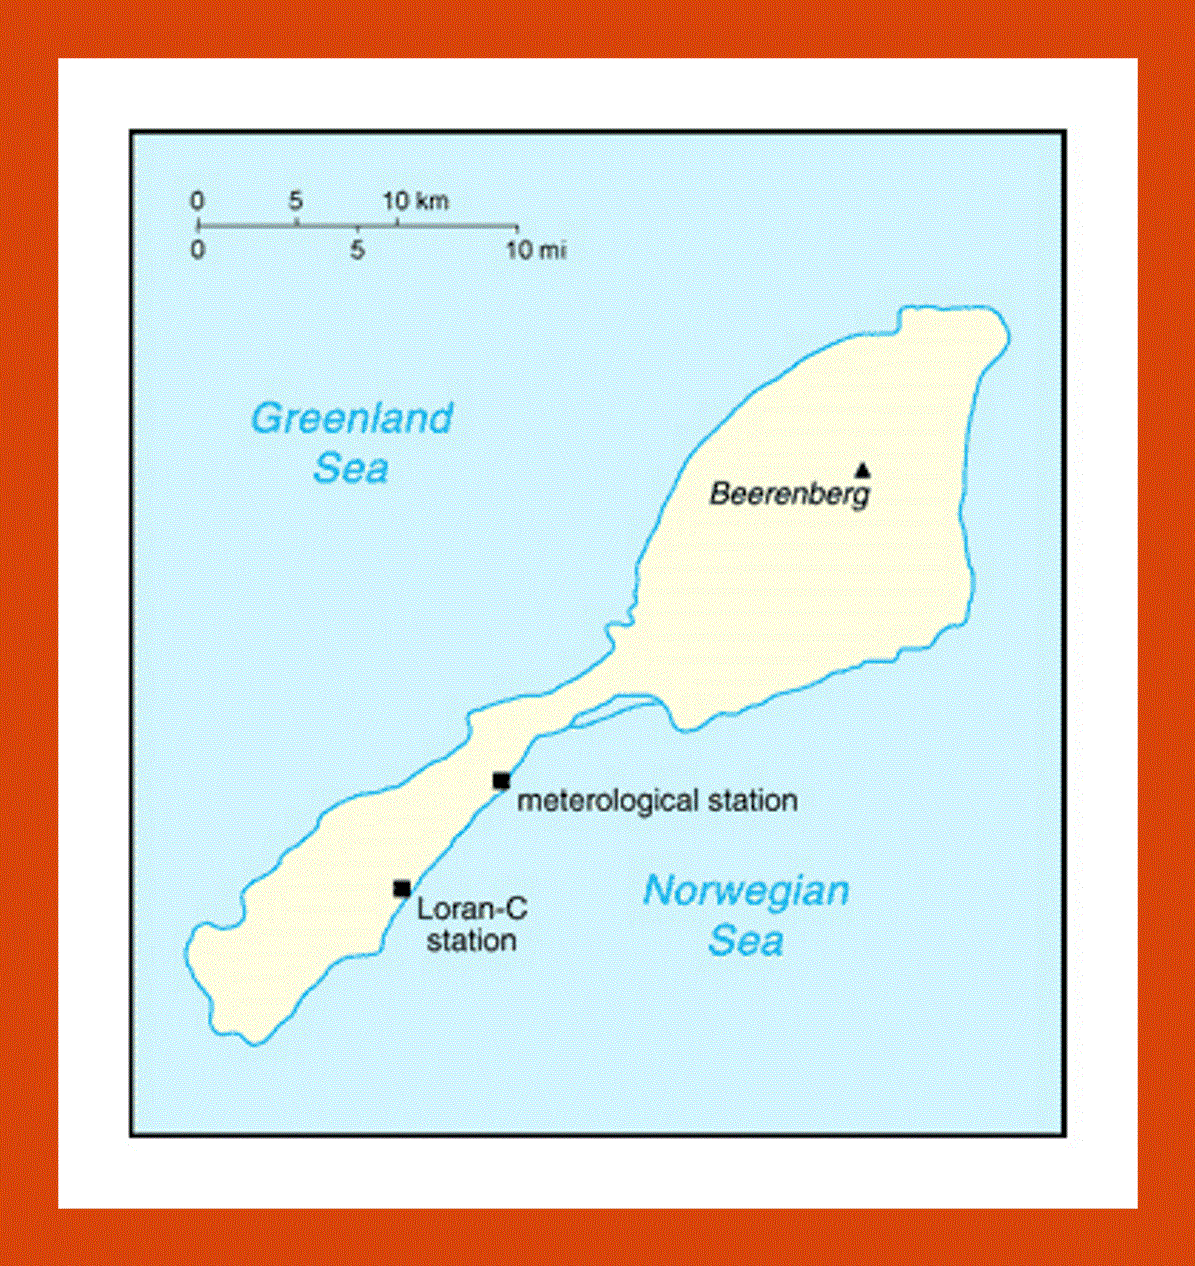 Map of Jan Mayen island